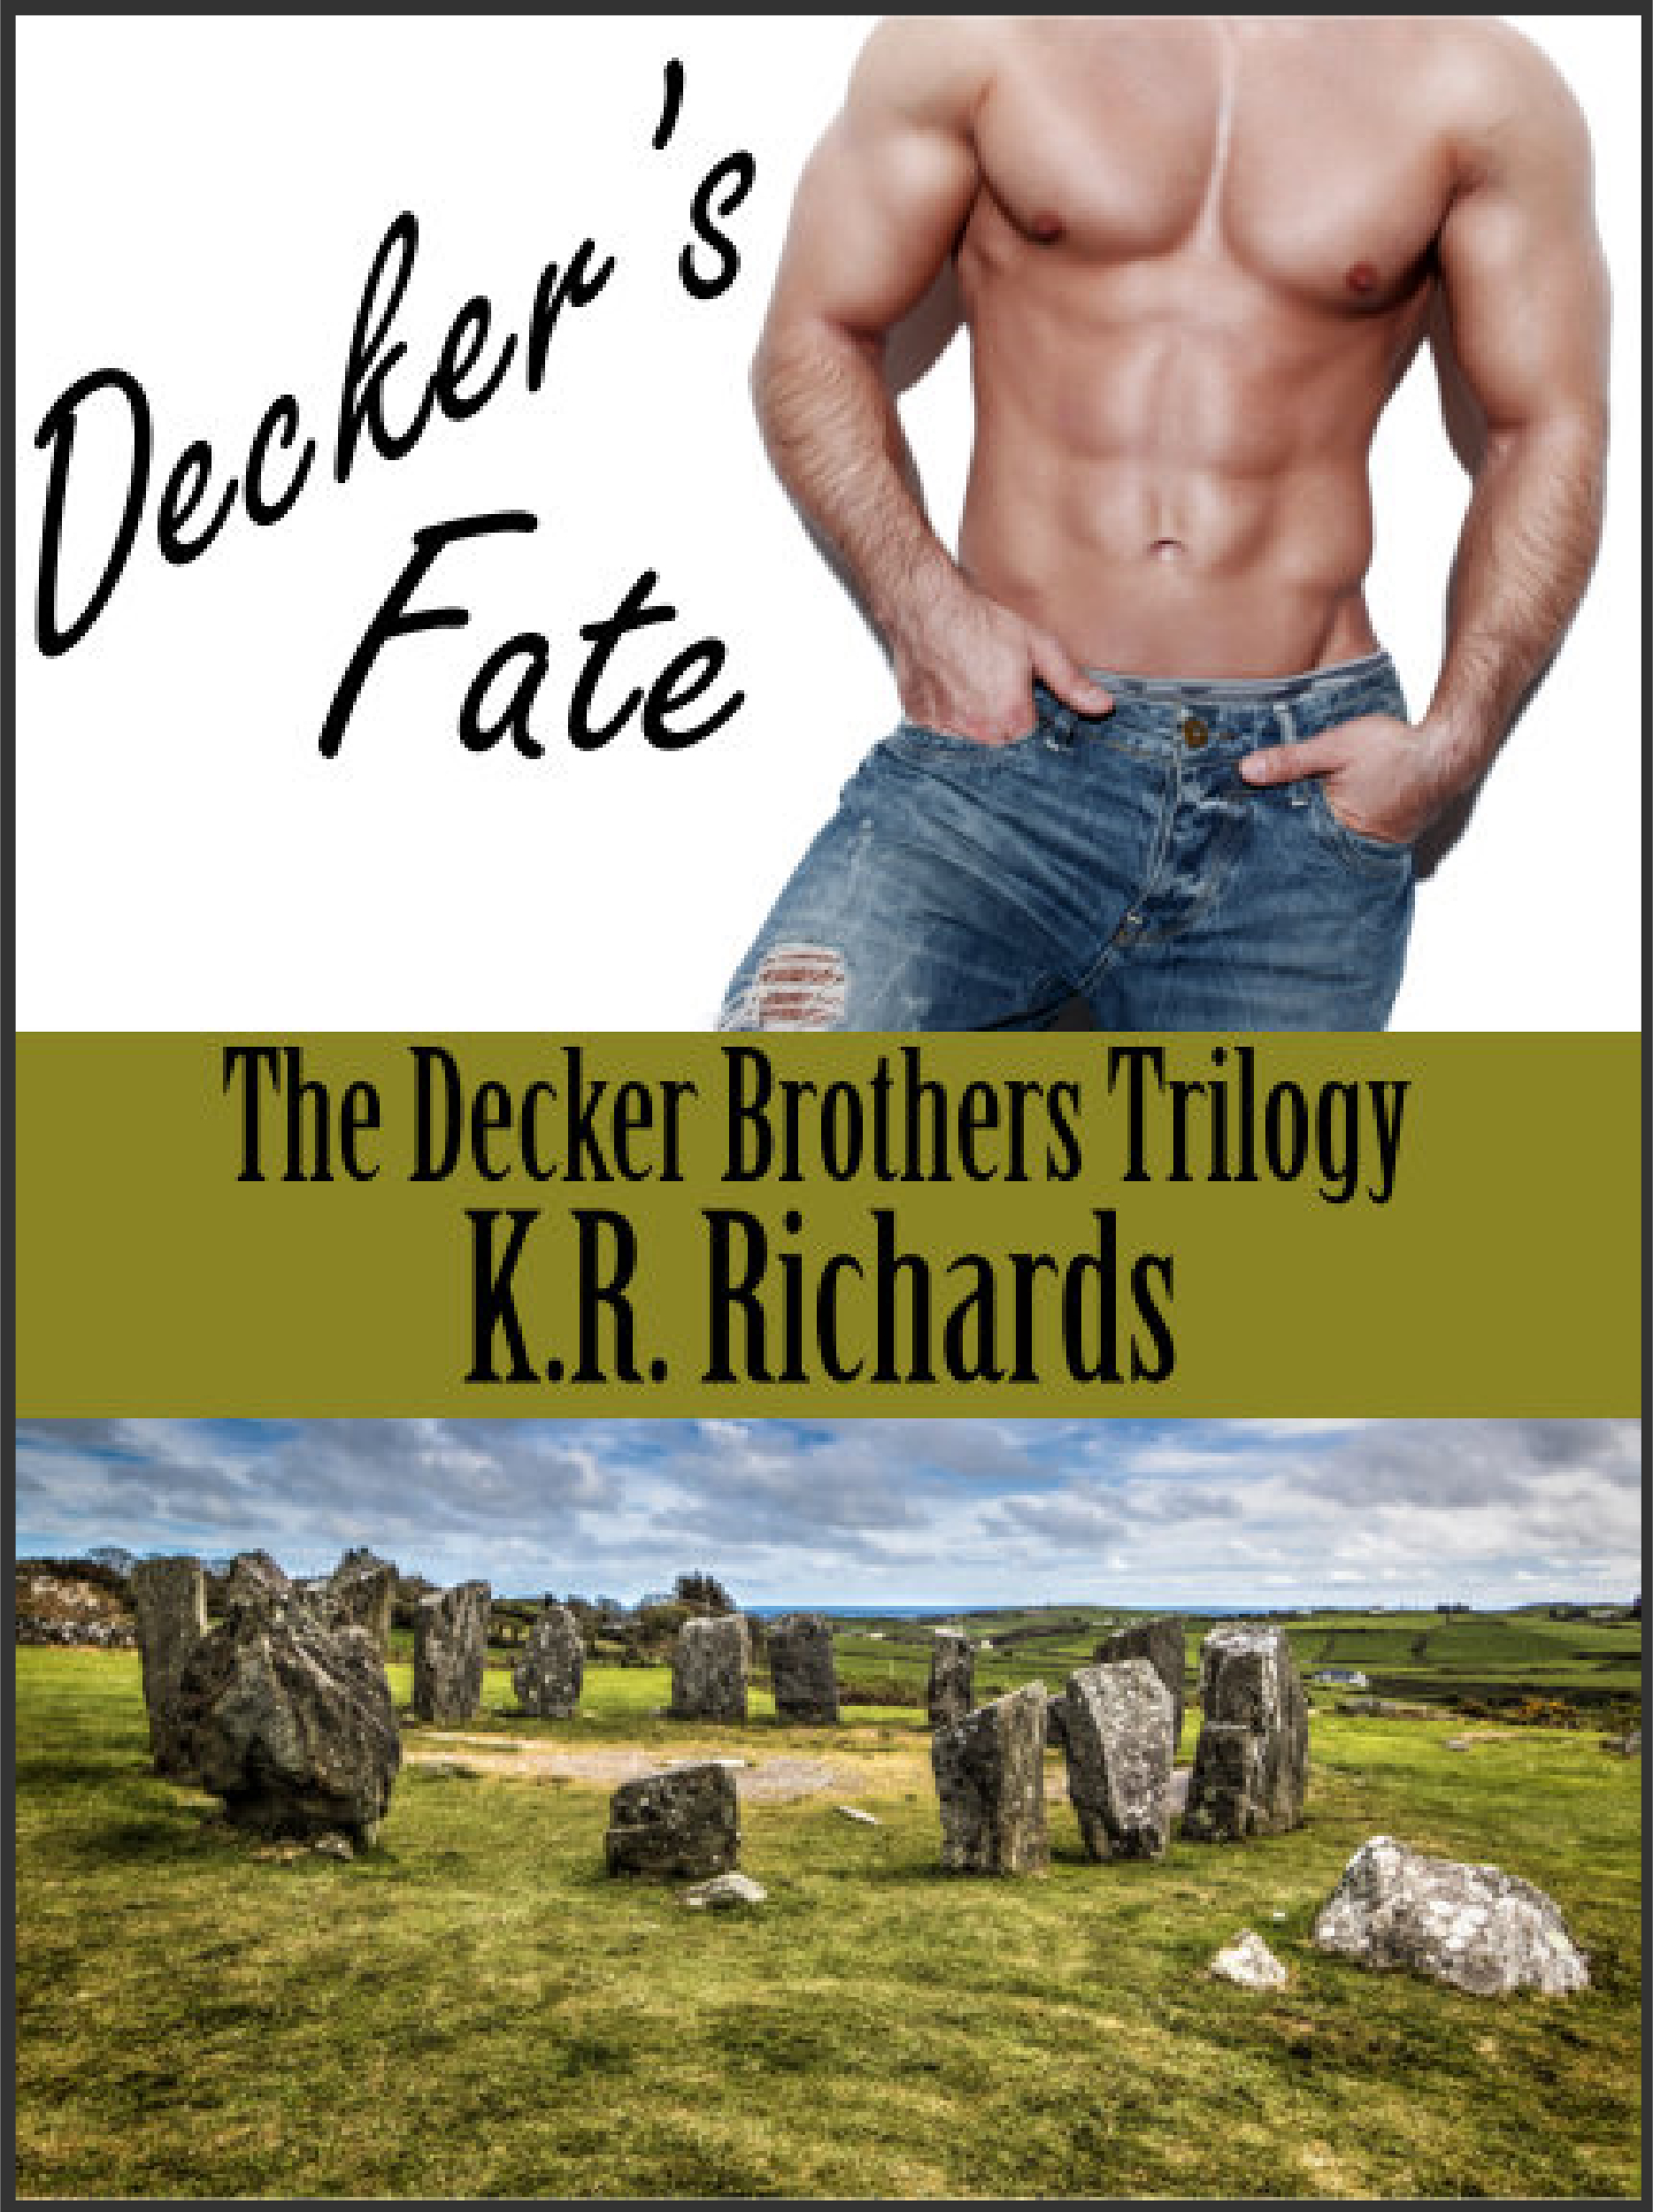 FREE: Decker’s Fate by K. R. Richards